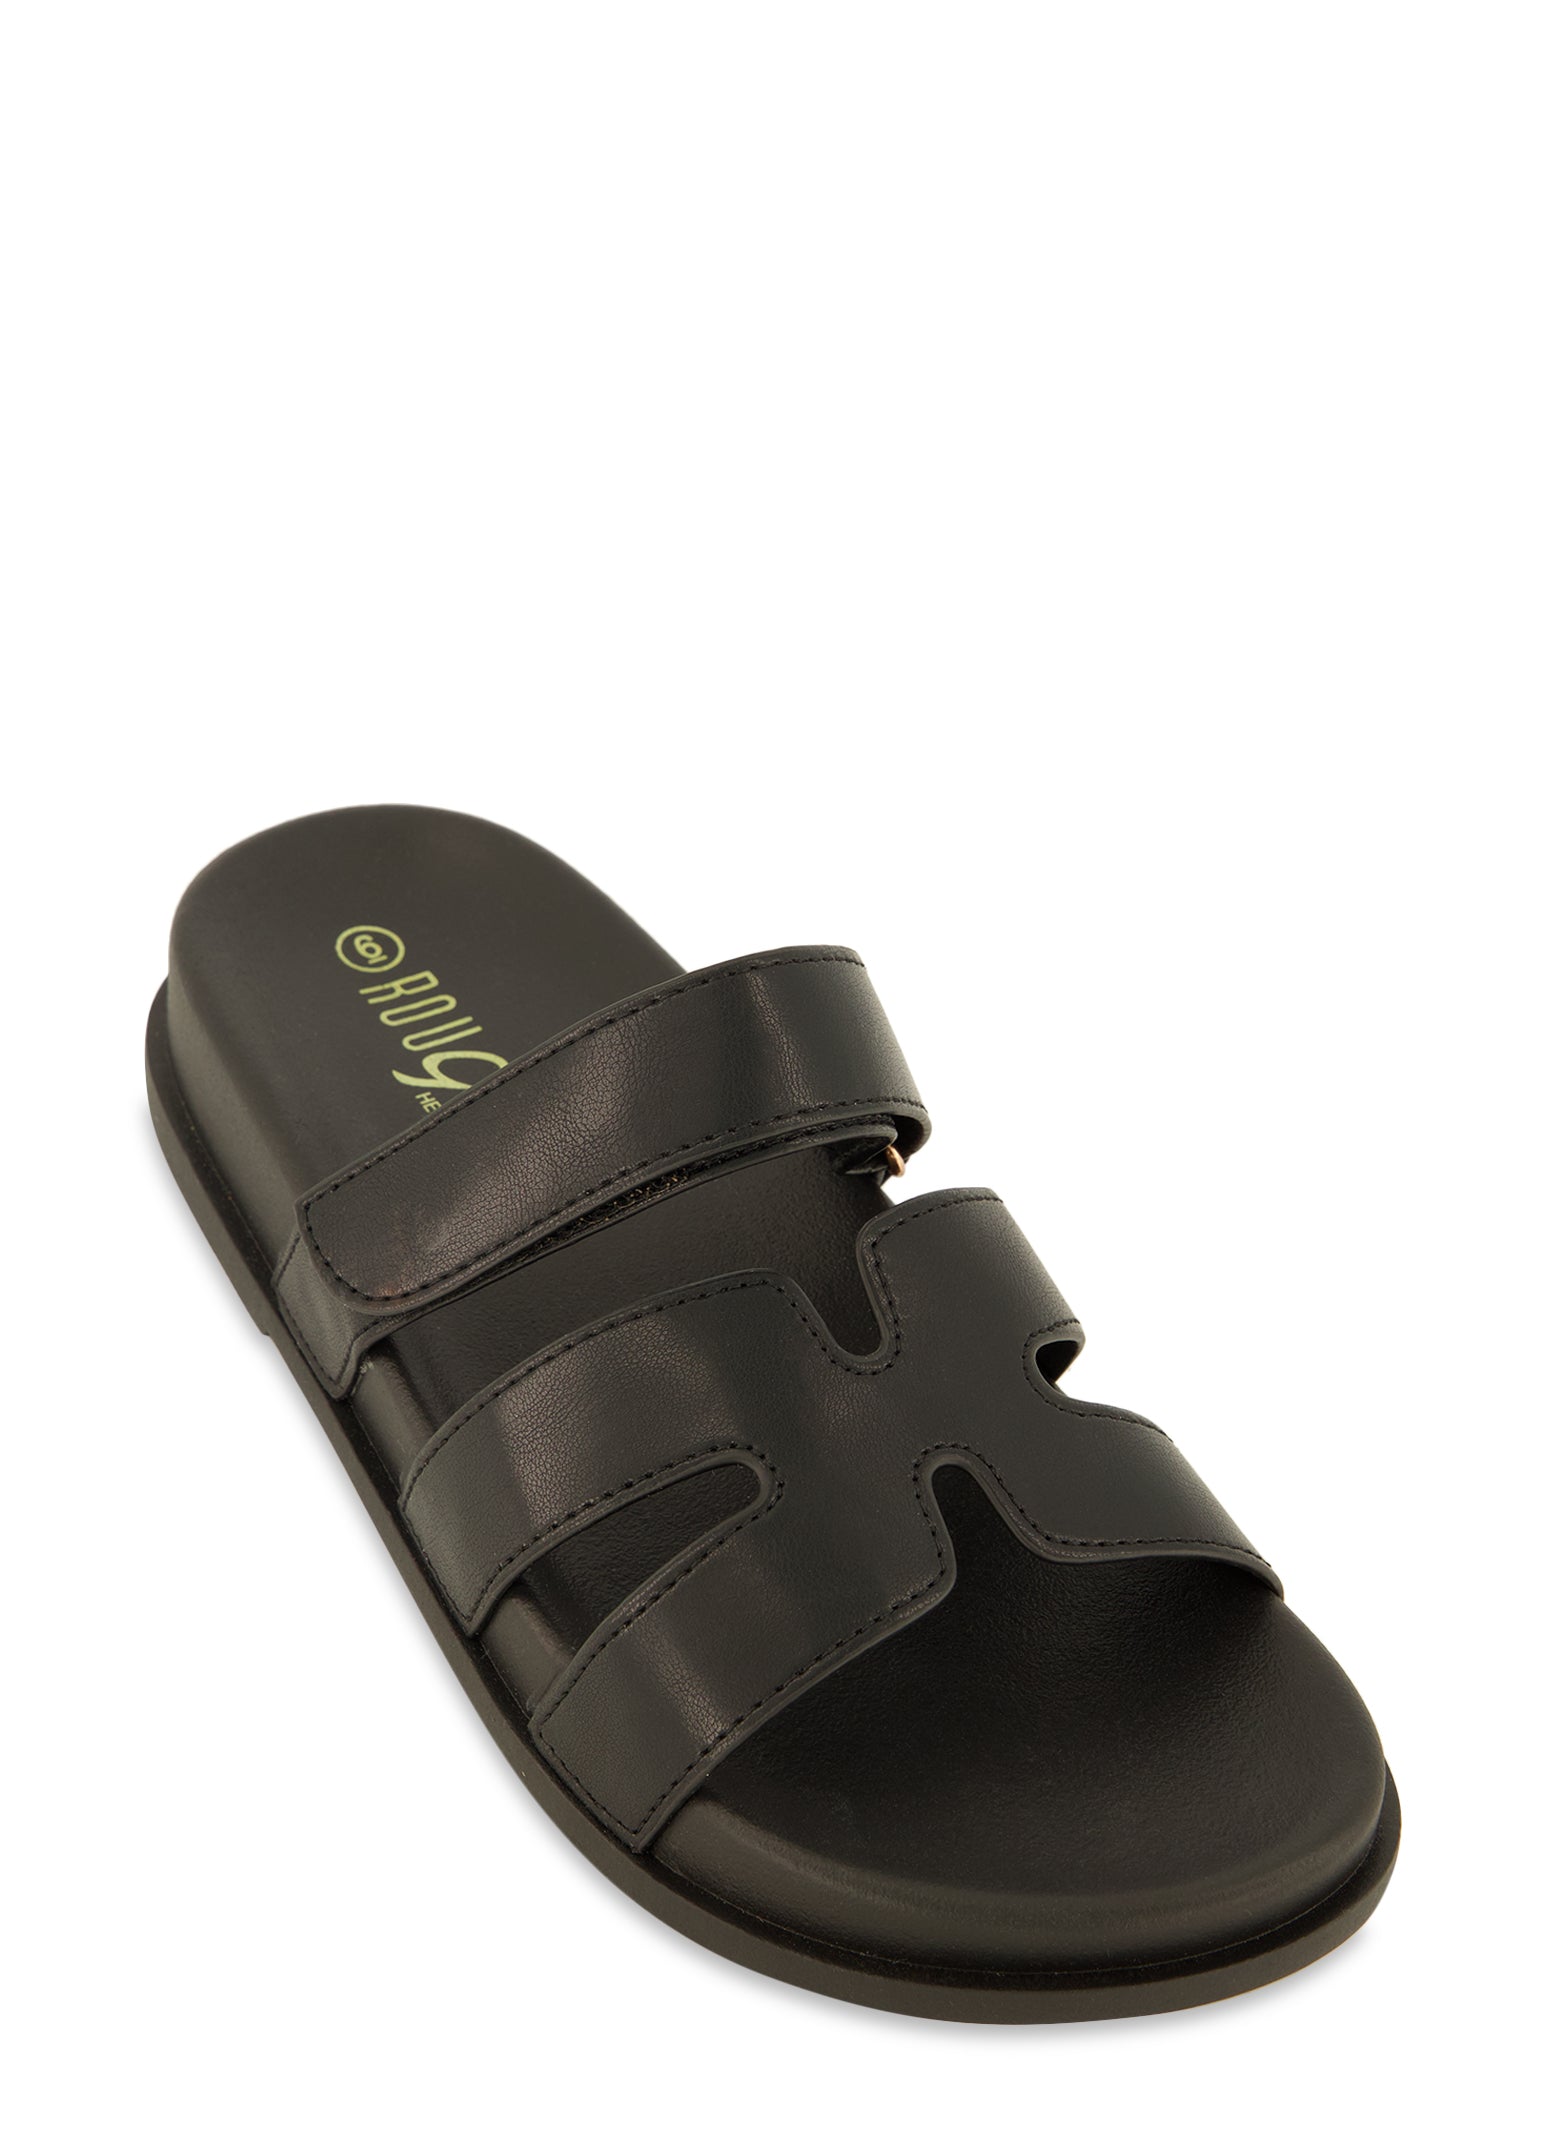 H Band Velcro Strap Slide Sandals